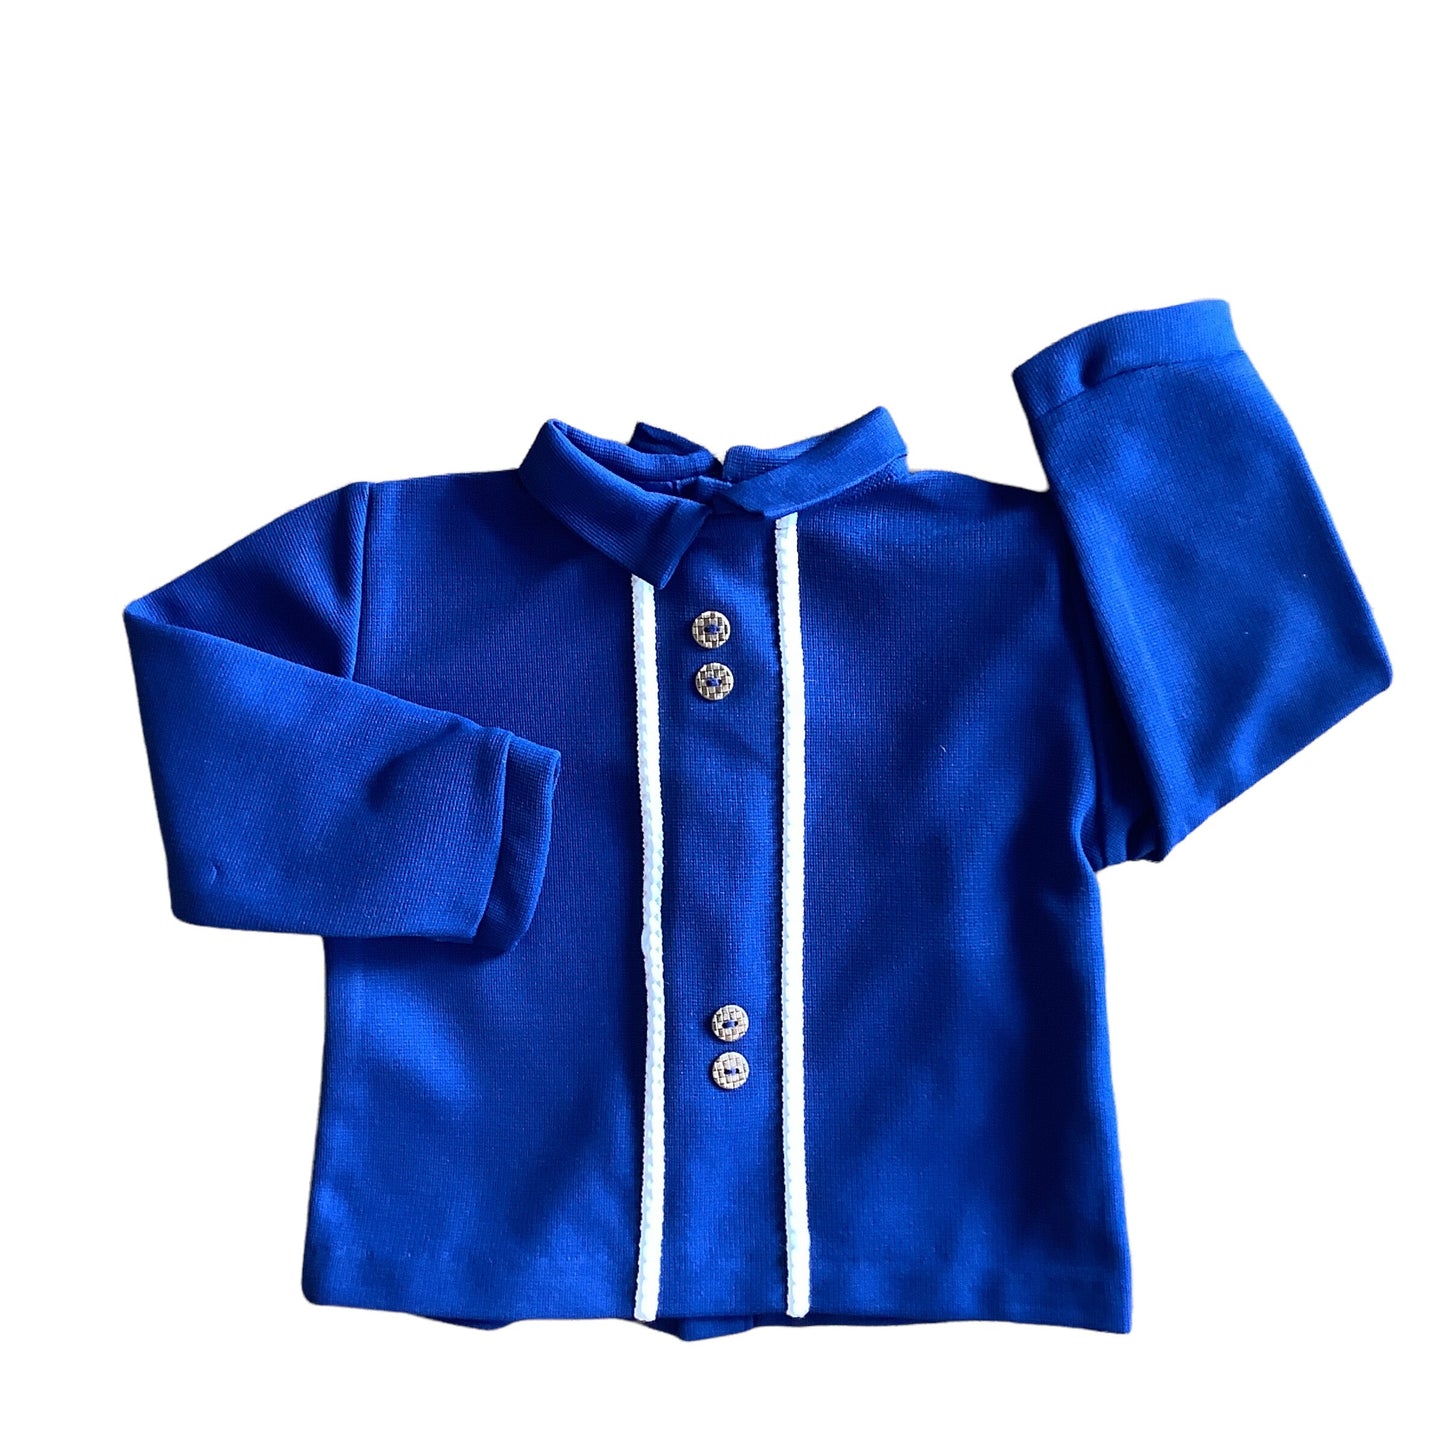 Vintage 1960s Blue Nylon Shirt / Top / 18-24M